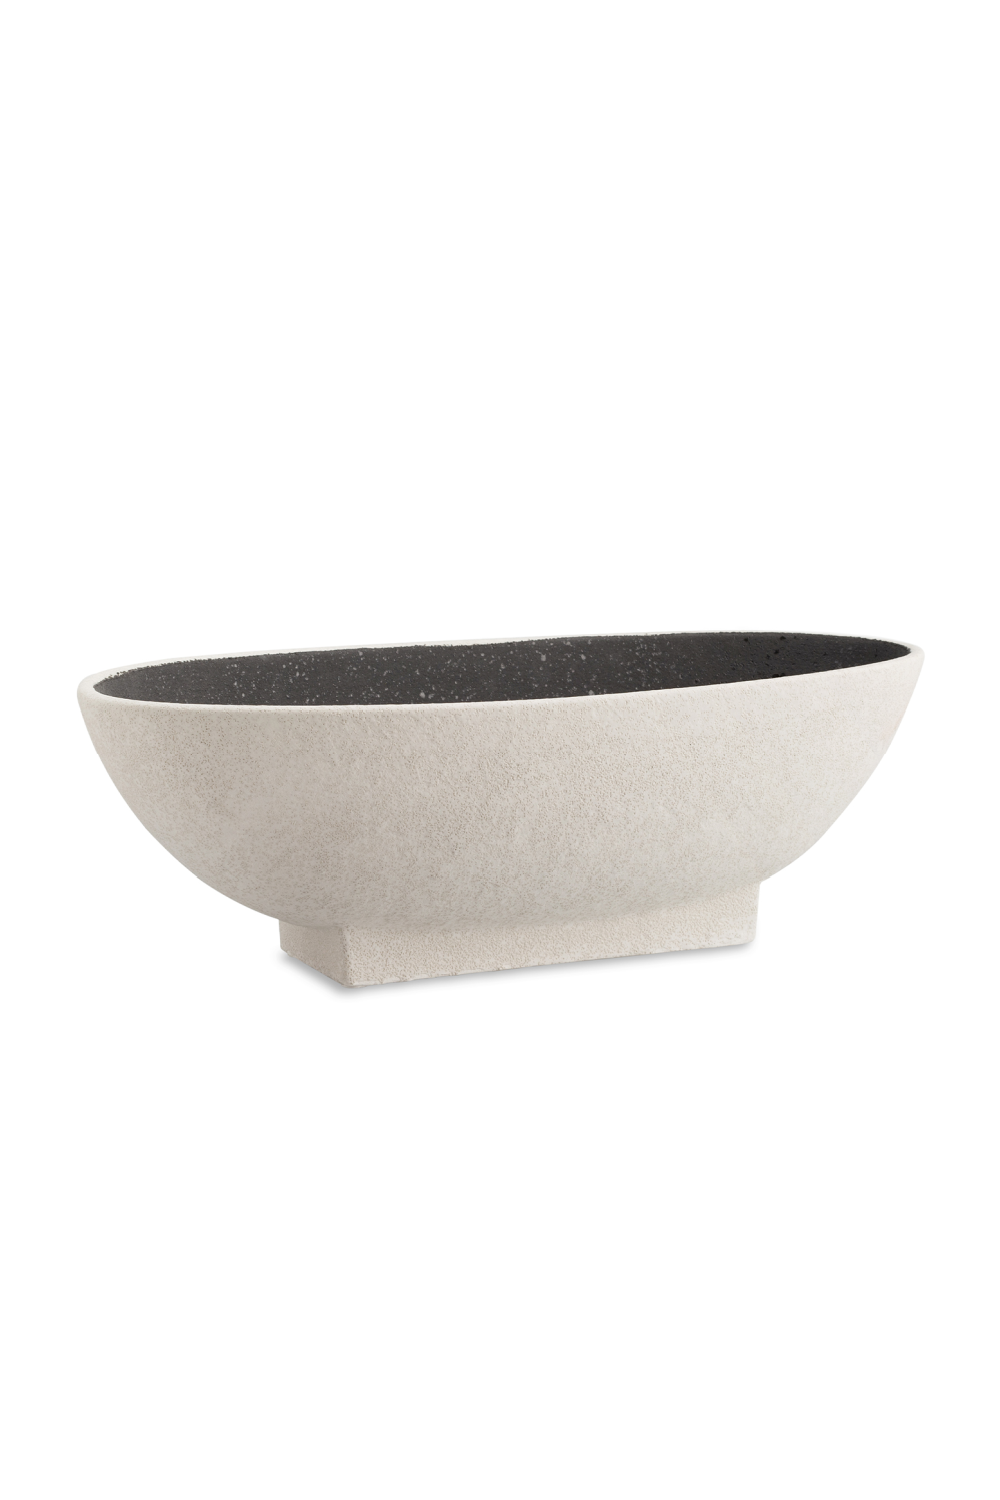 Textured White Ceramic Bowl | Liang & Eimil Baigne | OROA.com